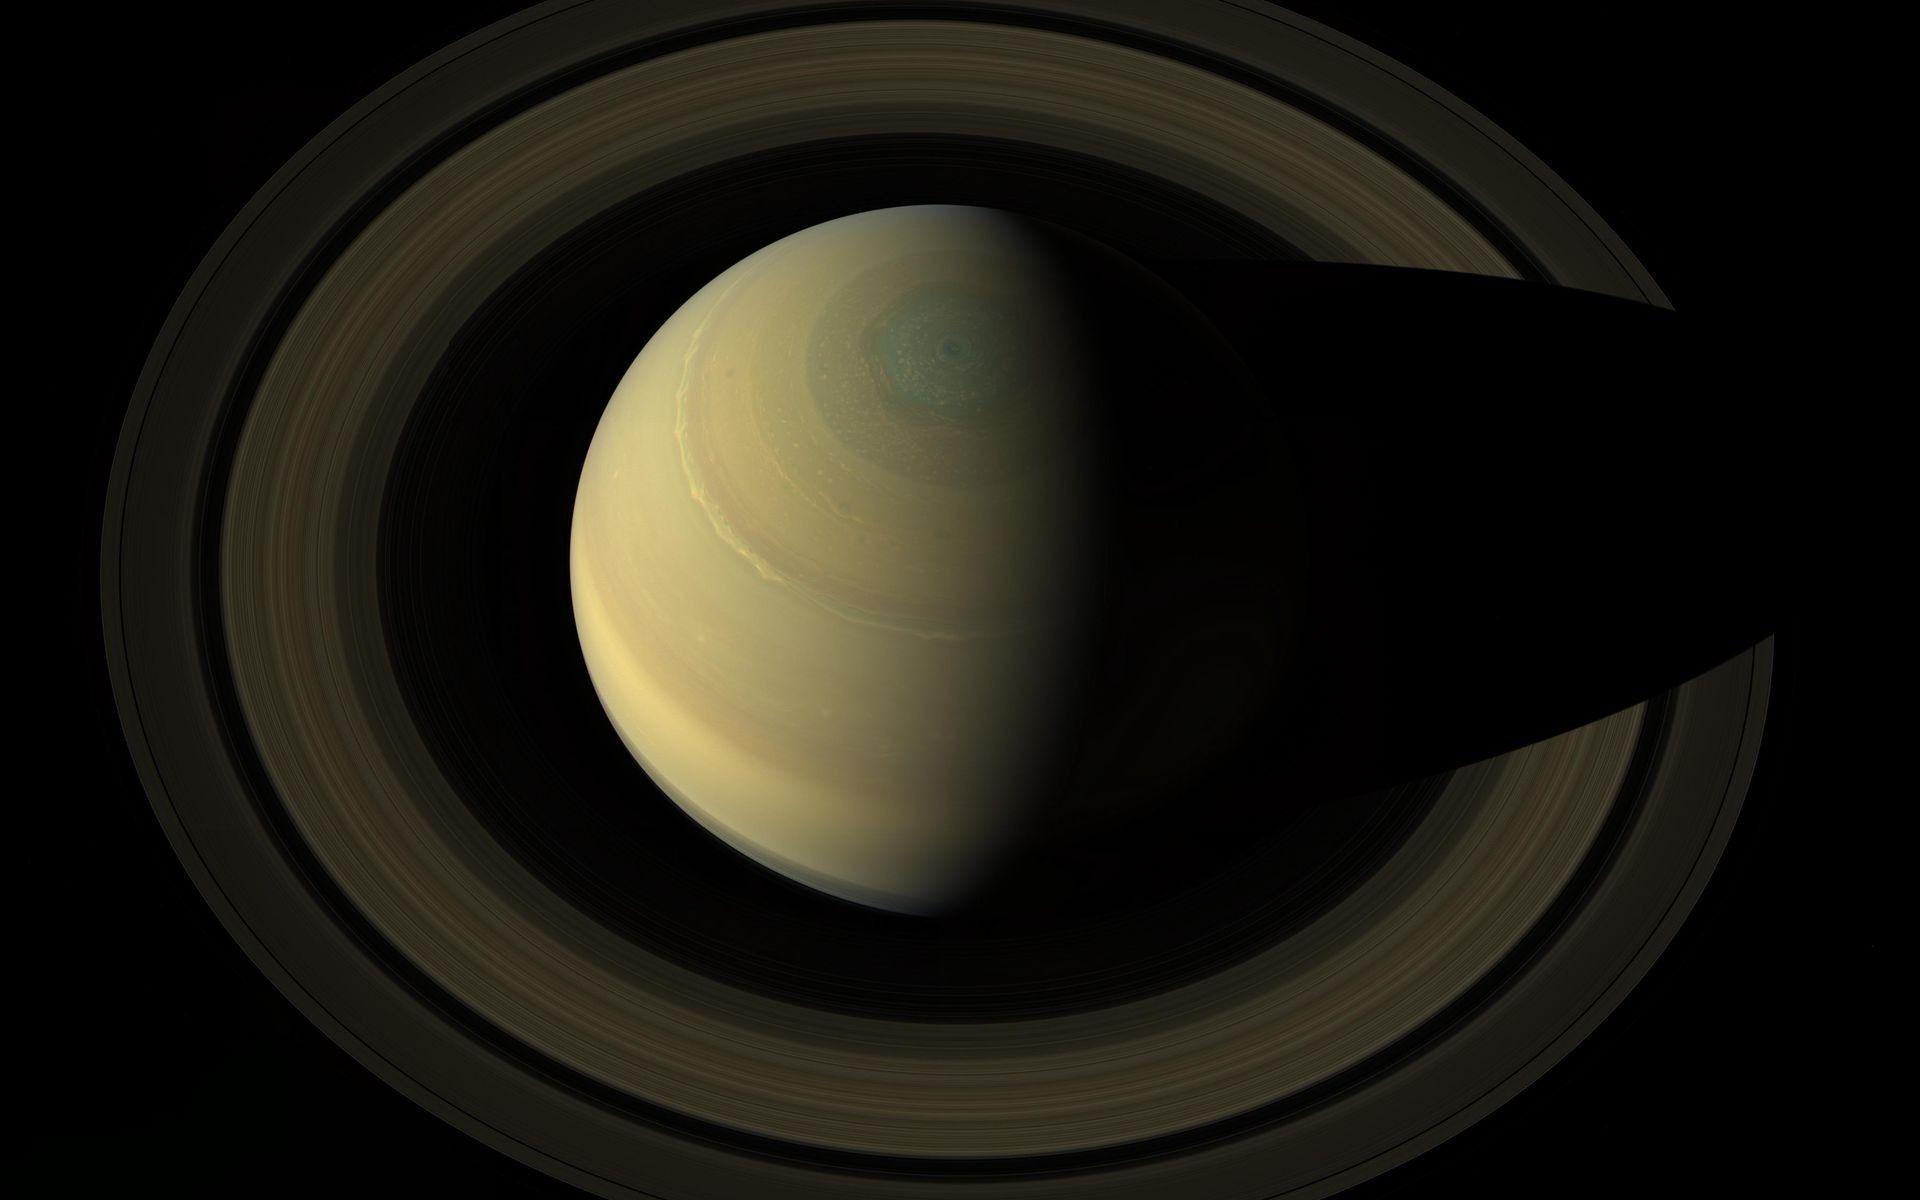 Nasa Saturn Planet Wallpapers Top Free Nasa Saturn Planet Backgrounds Wallpaperaccess 6459